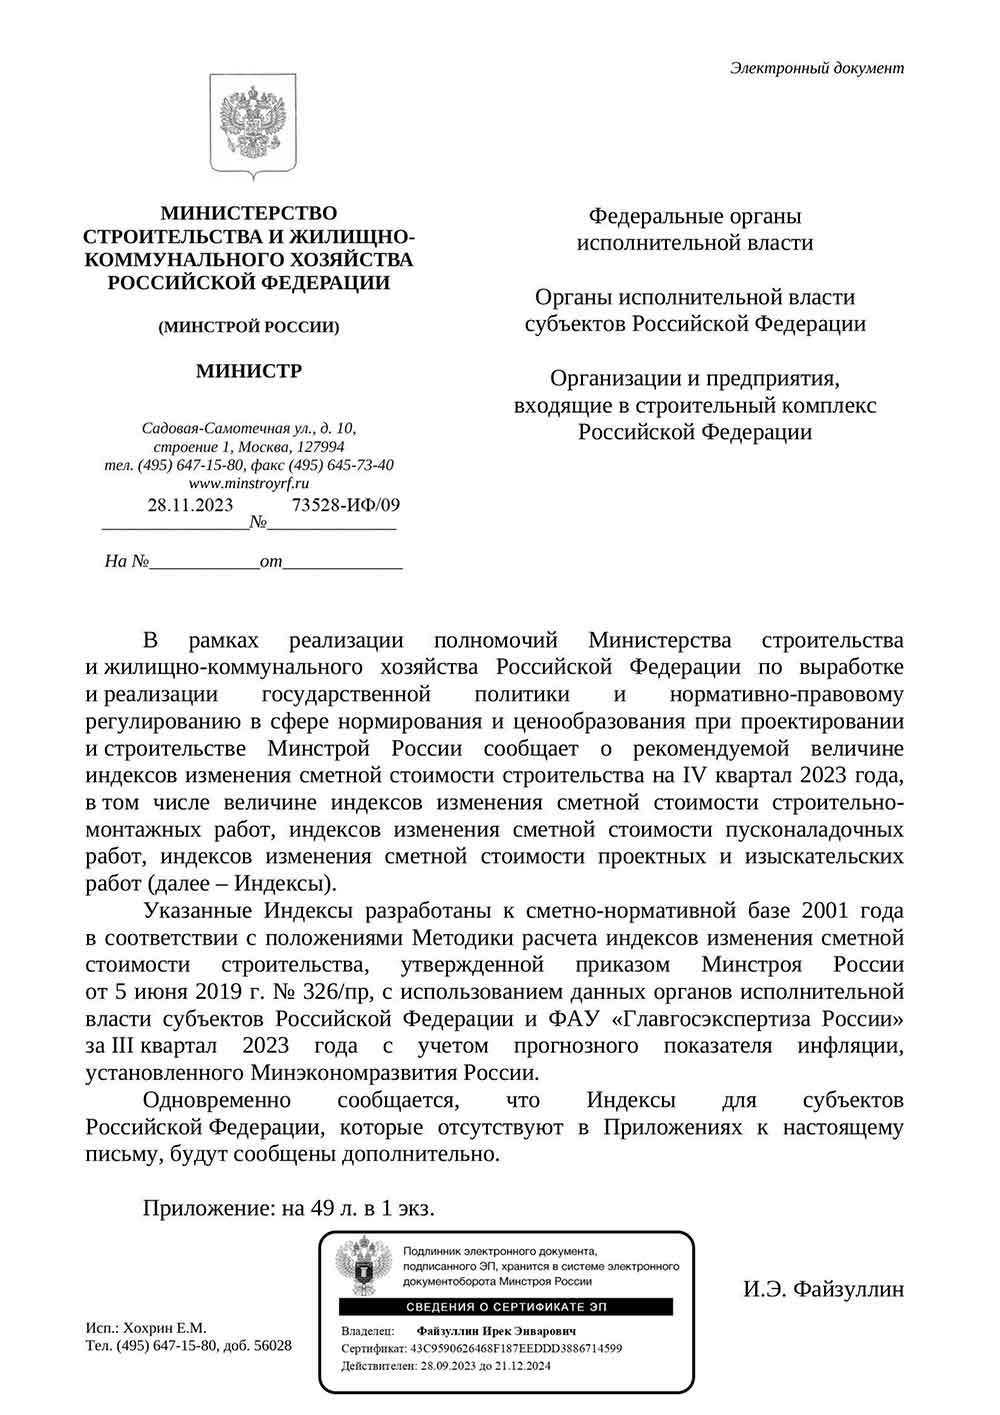 Письмо Минстроя РФ №73528-ИФ/09 от 28.11.2023 г.